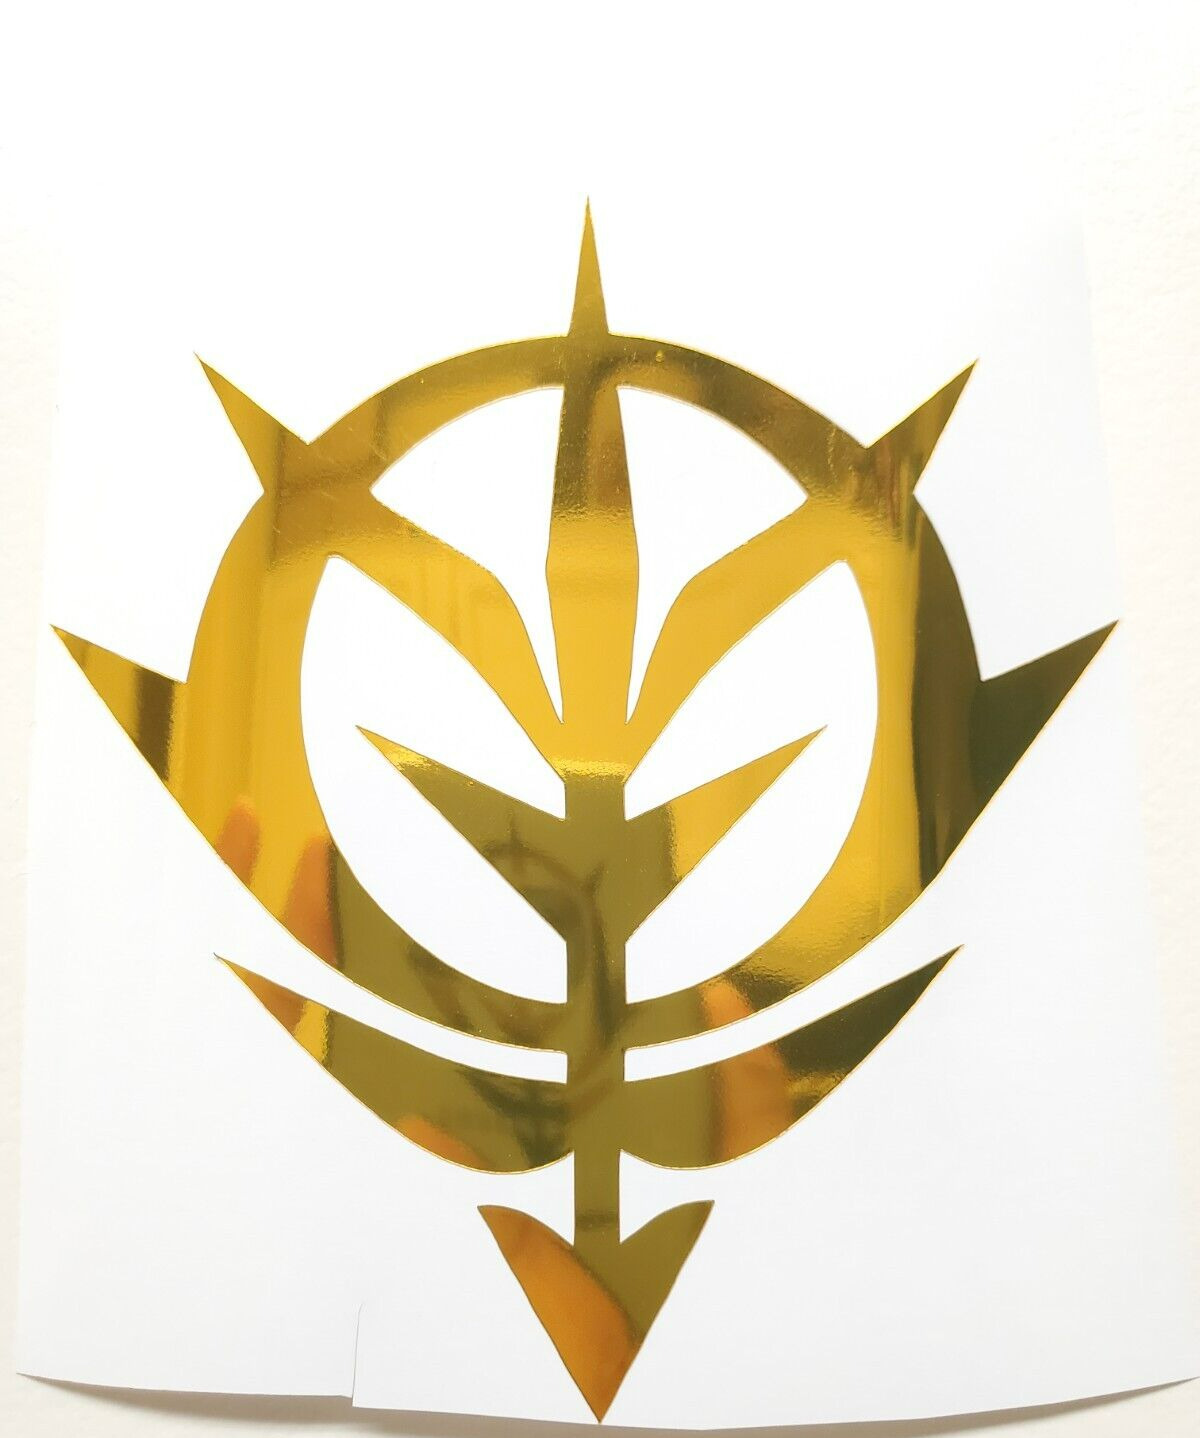 Mobile Suit Bandai Gundam Zeon Emblem Logo Gold Sticker Vinyl Decal  Waterproof